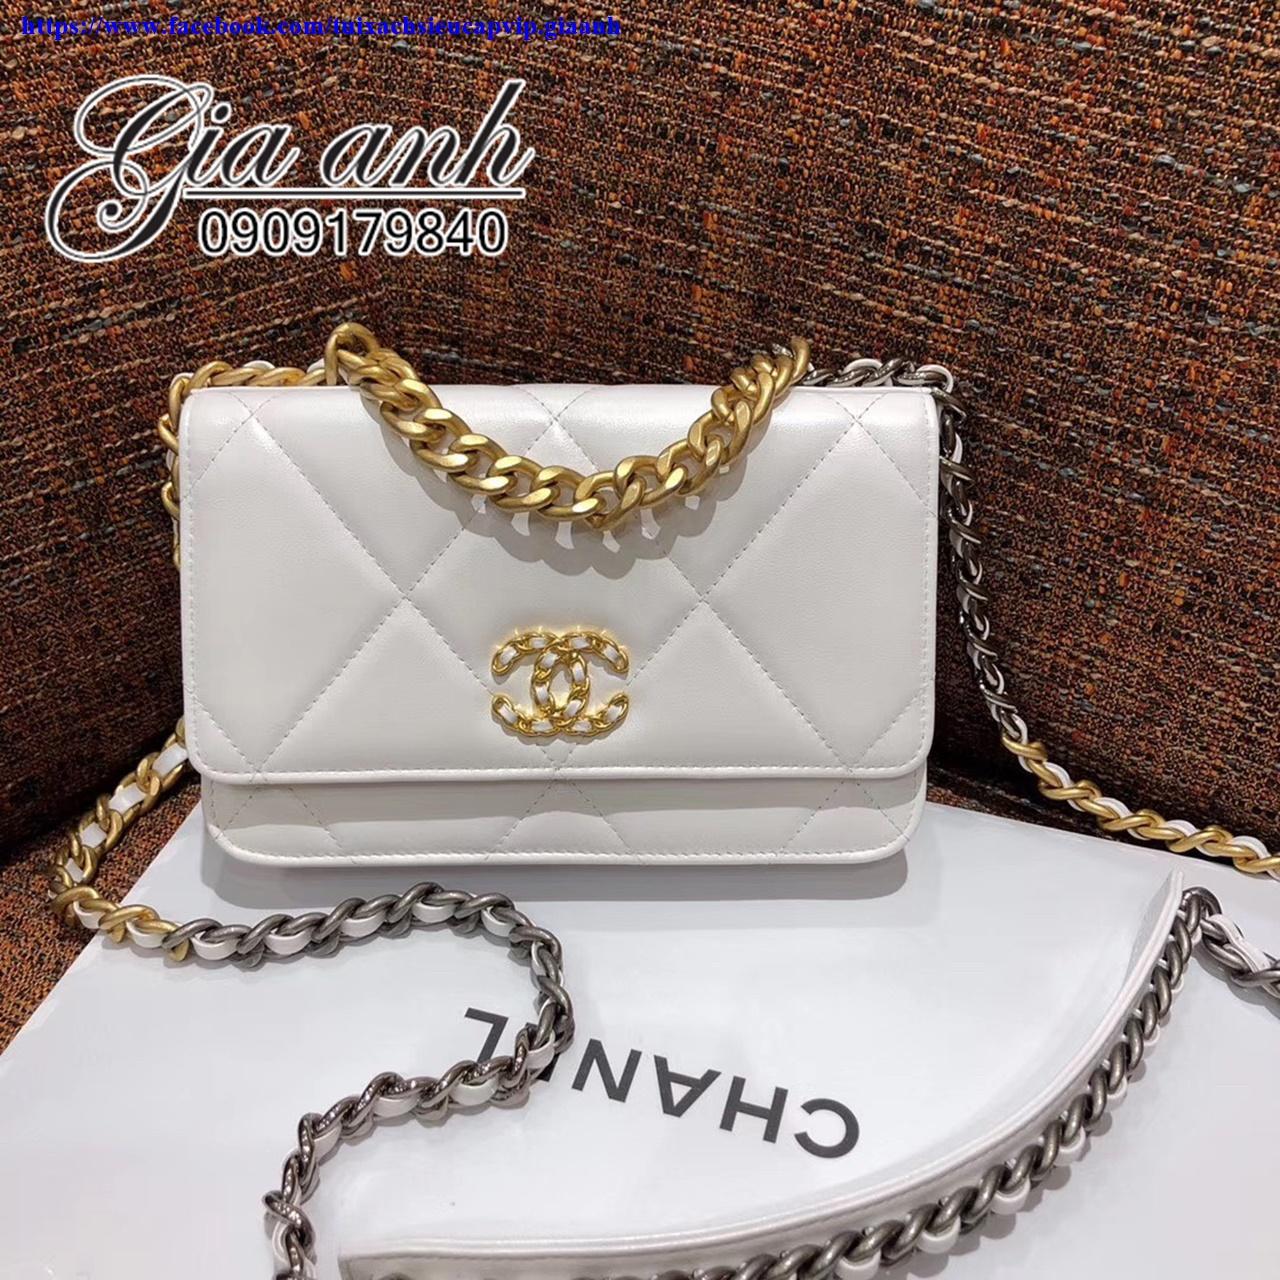 CHANEL Lambskin Chanel 19 Wallet On Gold Silver Chain Bag Pink Rose WOC  Satchel  IET INDUSTRIAL ANTONIO PRIETO  SINCELEJO SUCRE